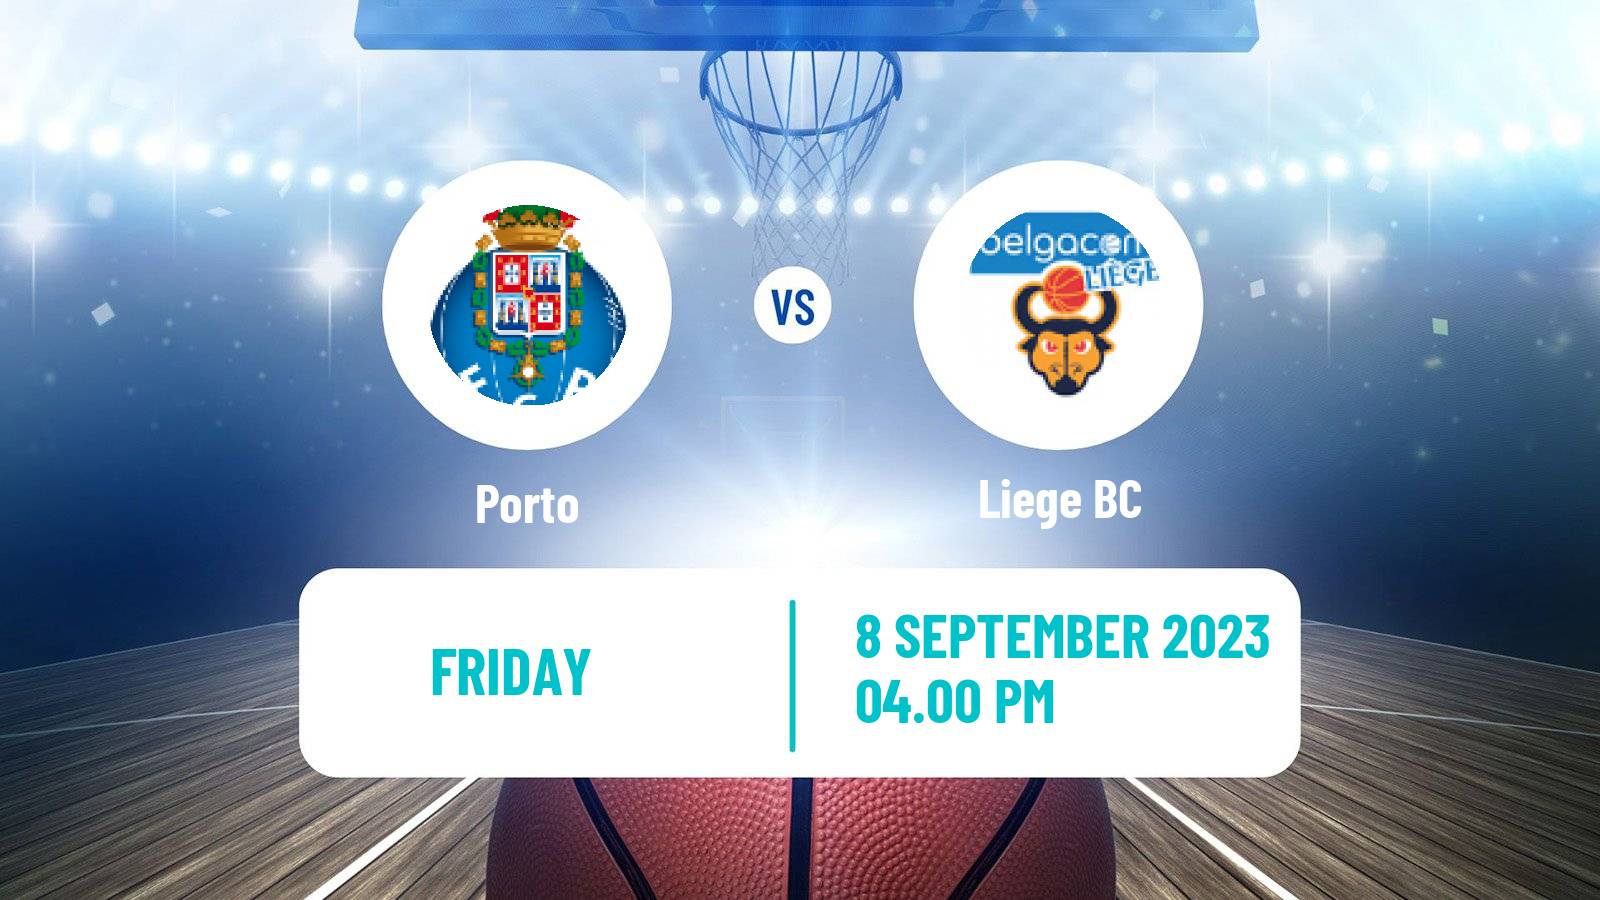 Basketball Club Friendly Basketball Porto - Liege